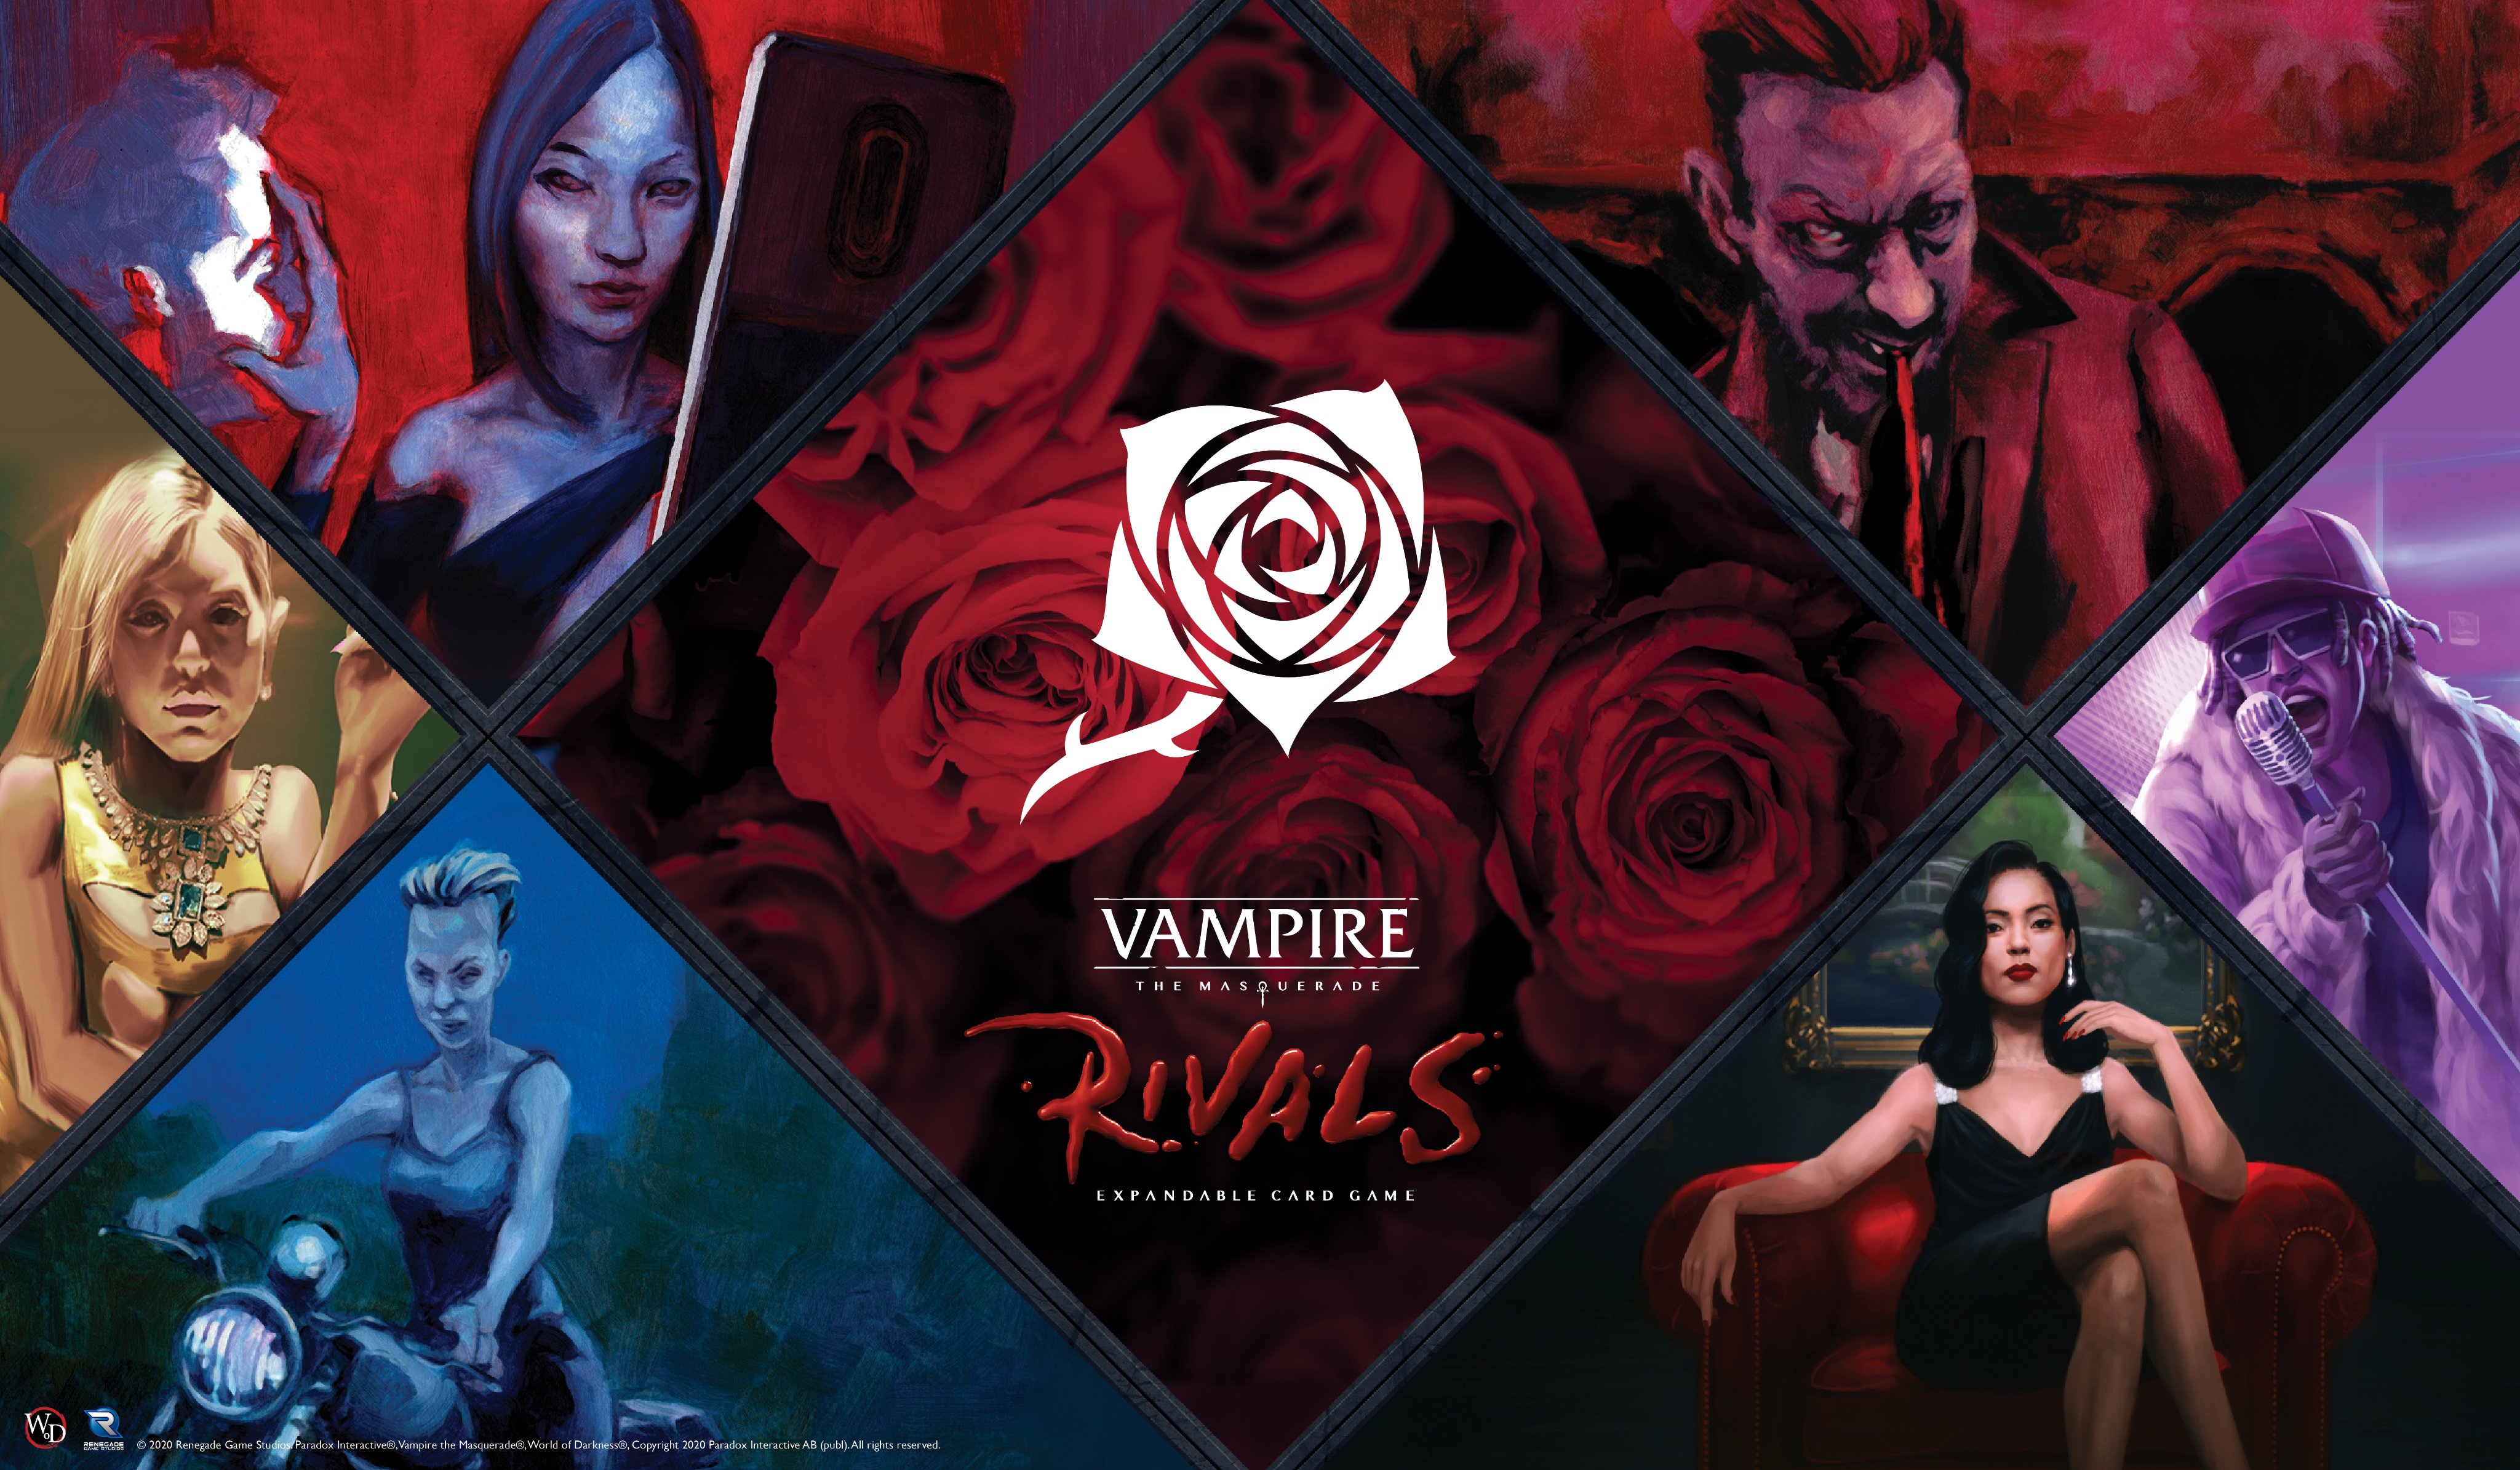 Vampire: The Masquerade Rivals Angela & Stefan Cel Tradat Promo Pack